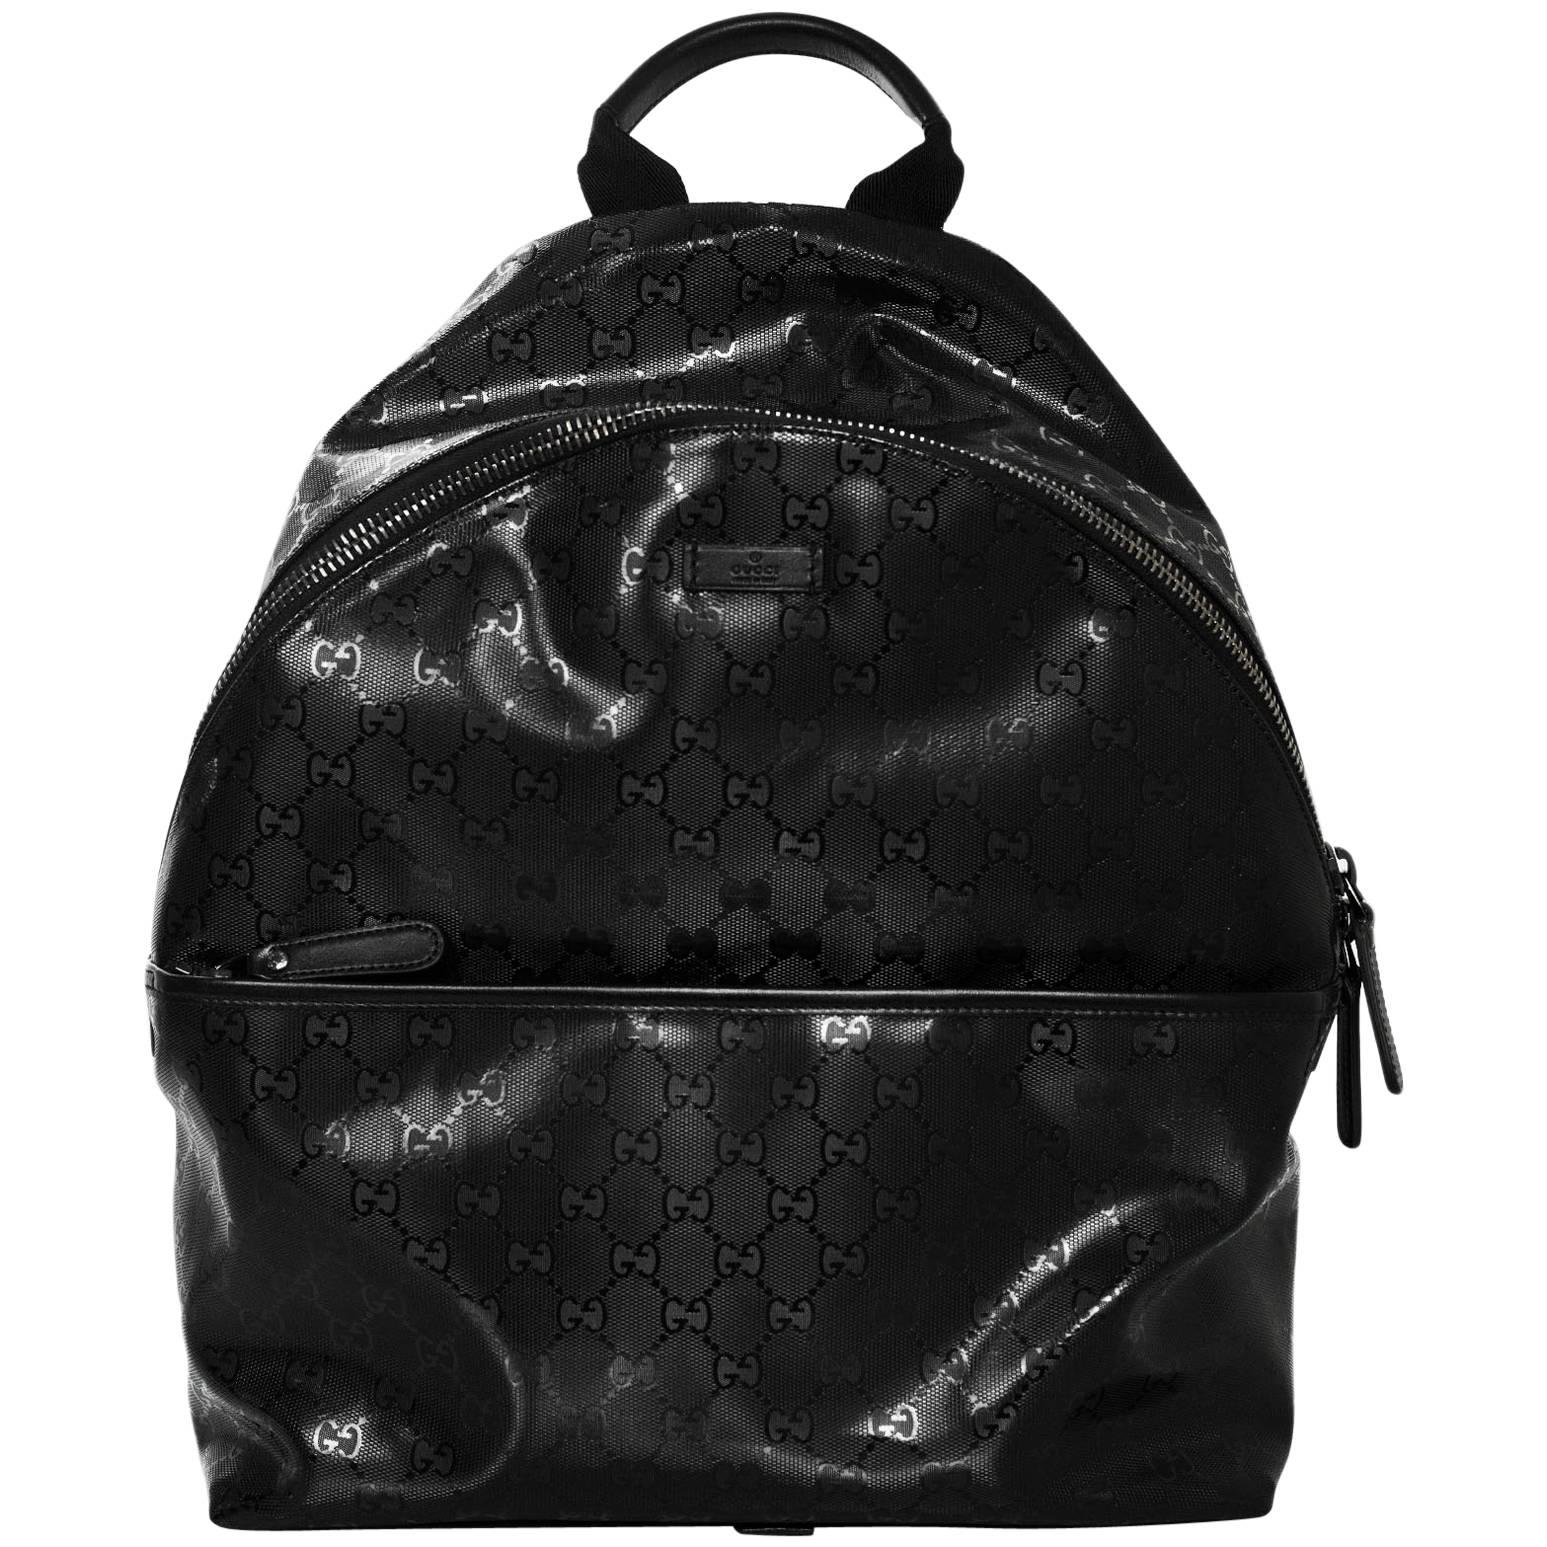 Gucci Unisex Black Like New GG Imprime Backpack Bag 